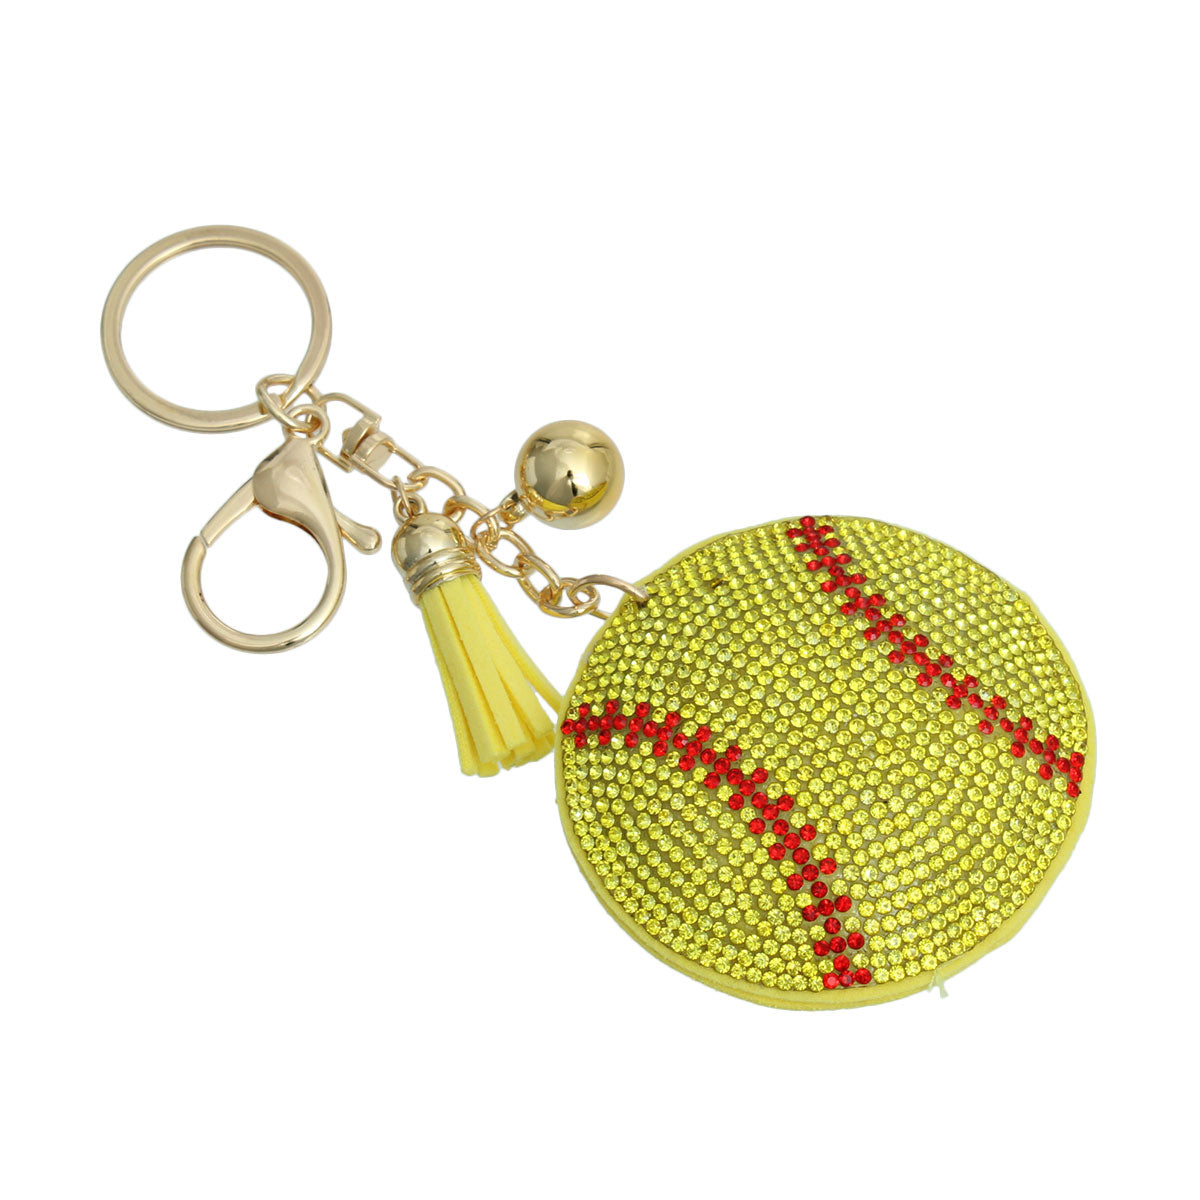 Softball Keychain Bag Charm